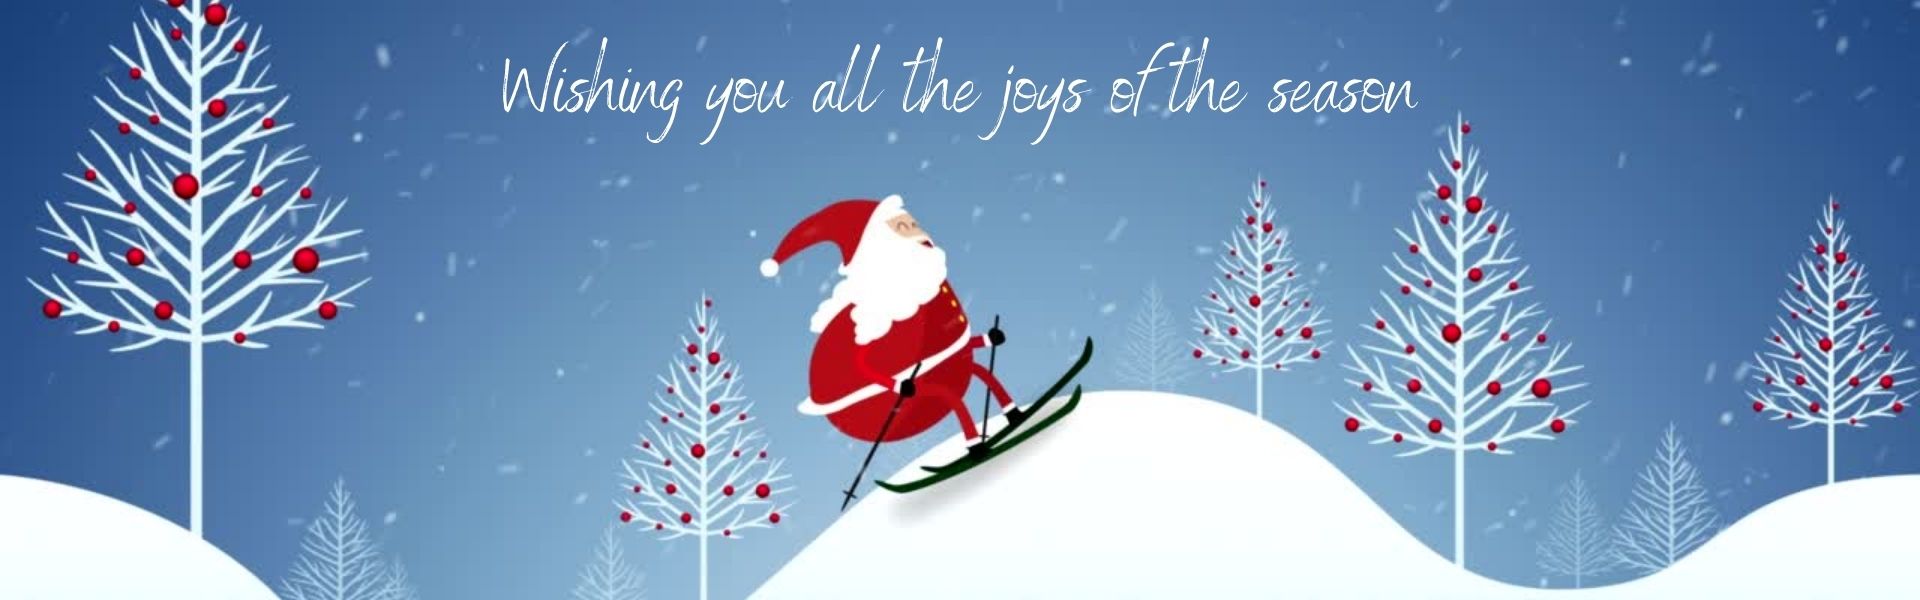 Wishing you all the joys of the season